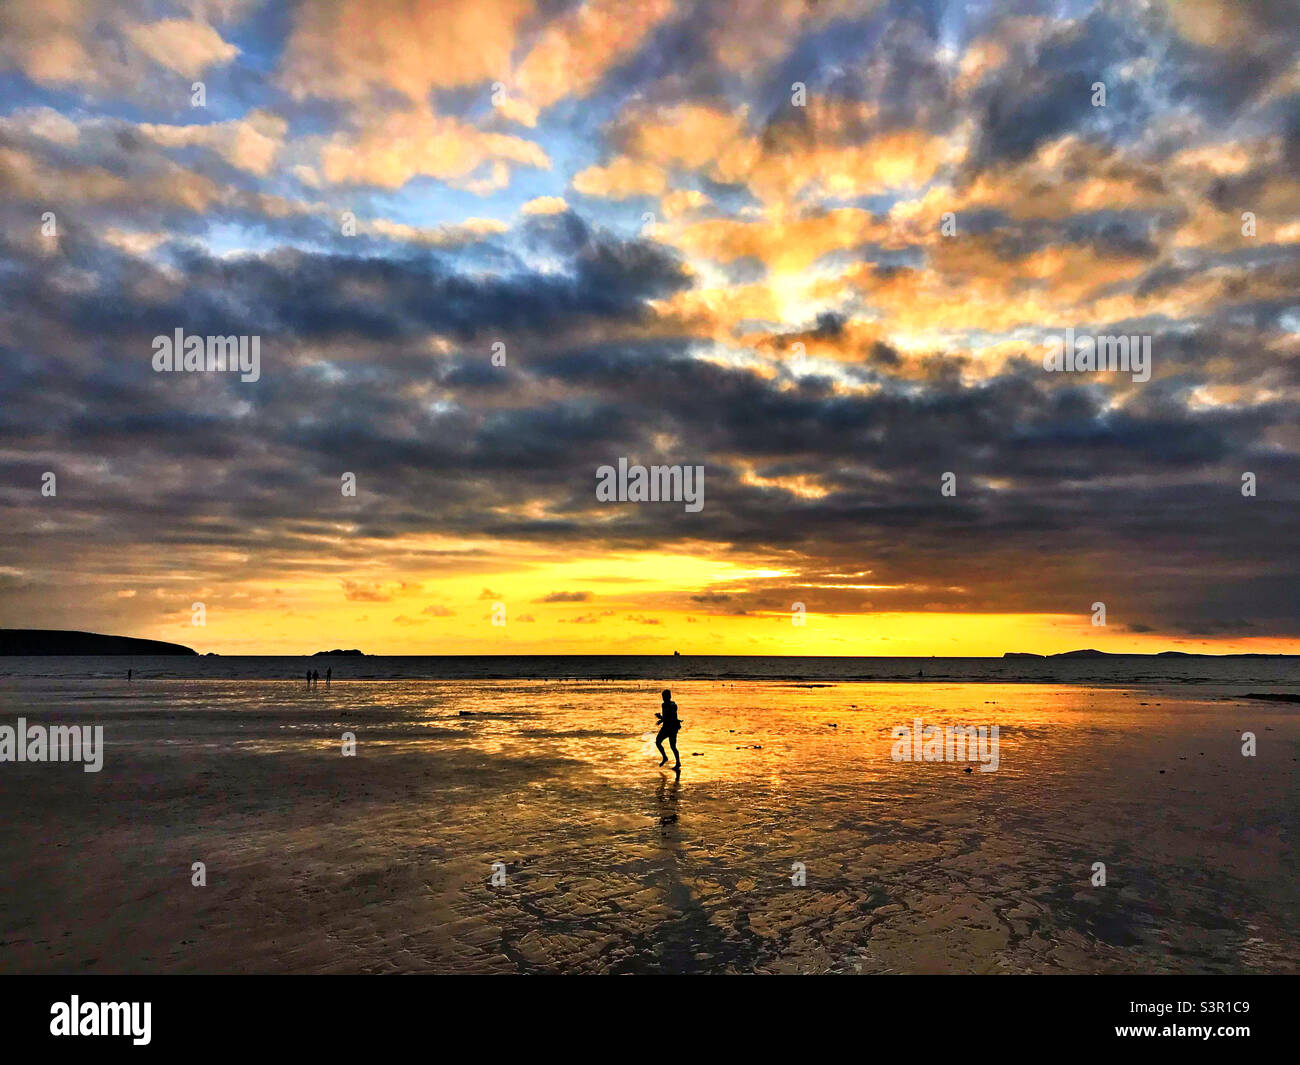 A single figure running on a beach at sunset Stock Photo